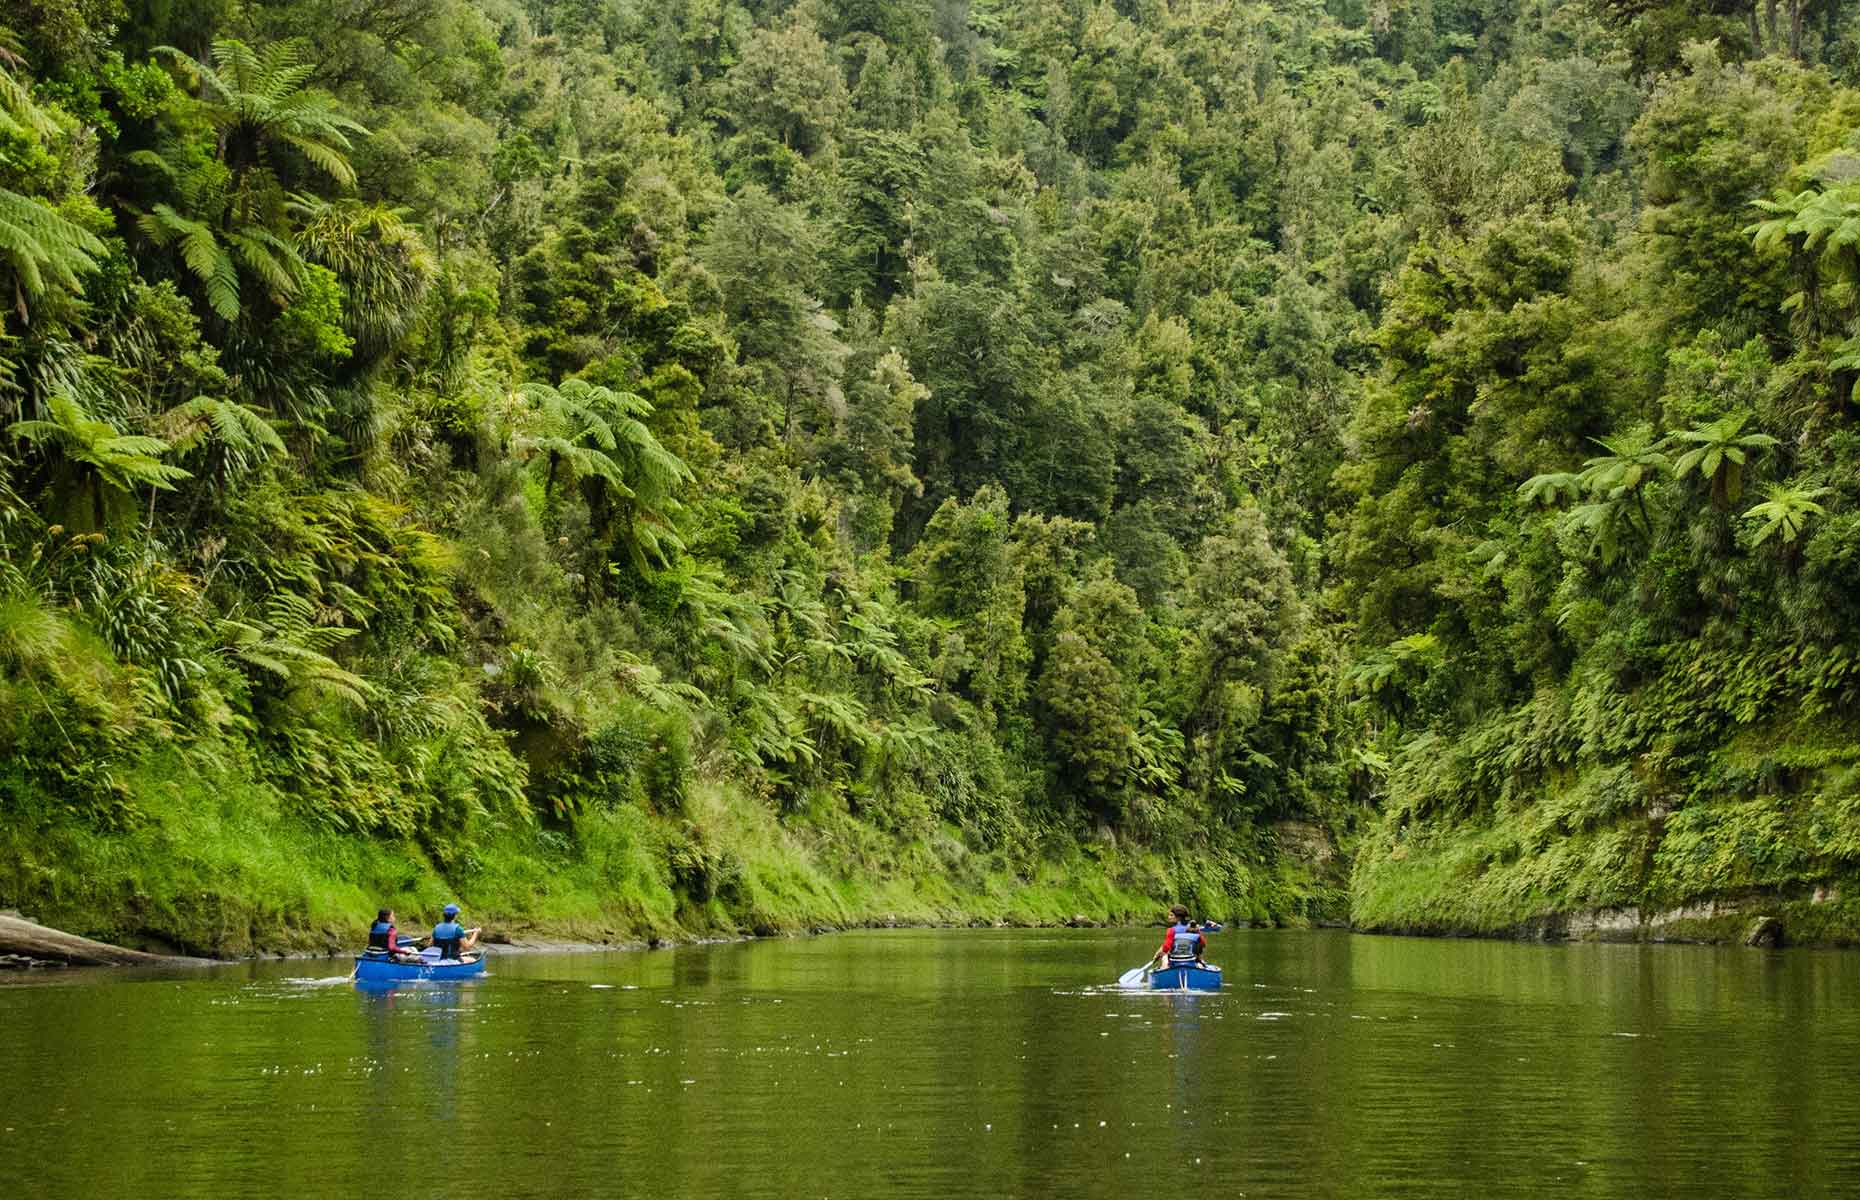 Whanganui Journey, Whanganui, New Zealand (Image credits: Tourism New Zealand)